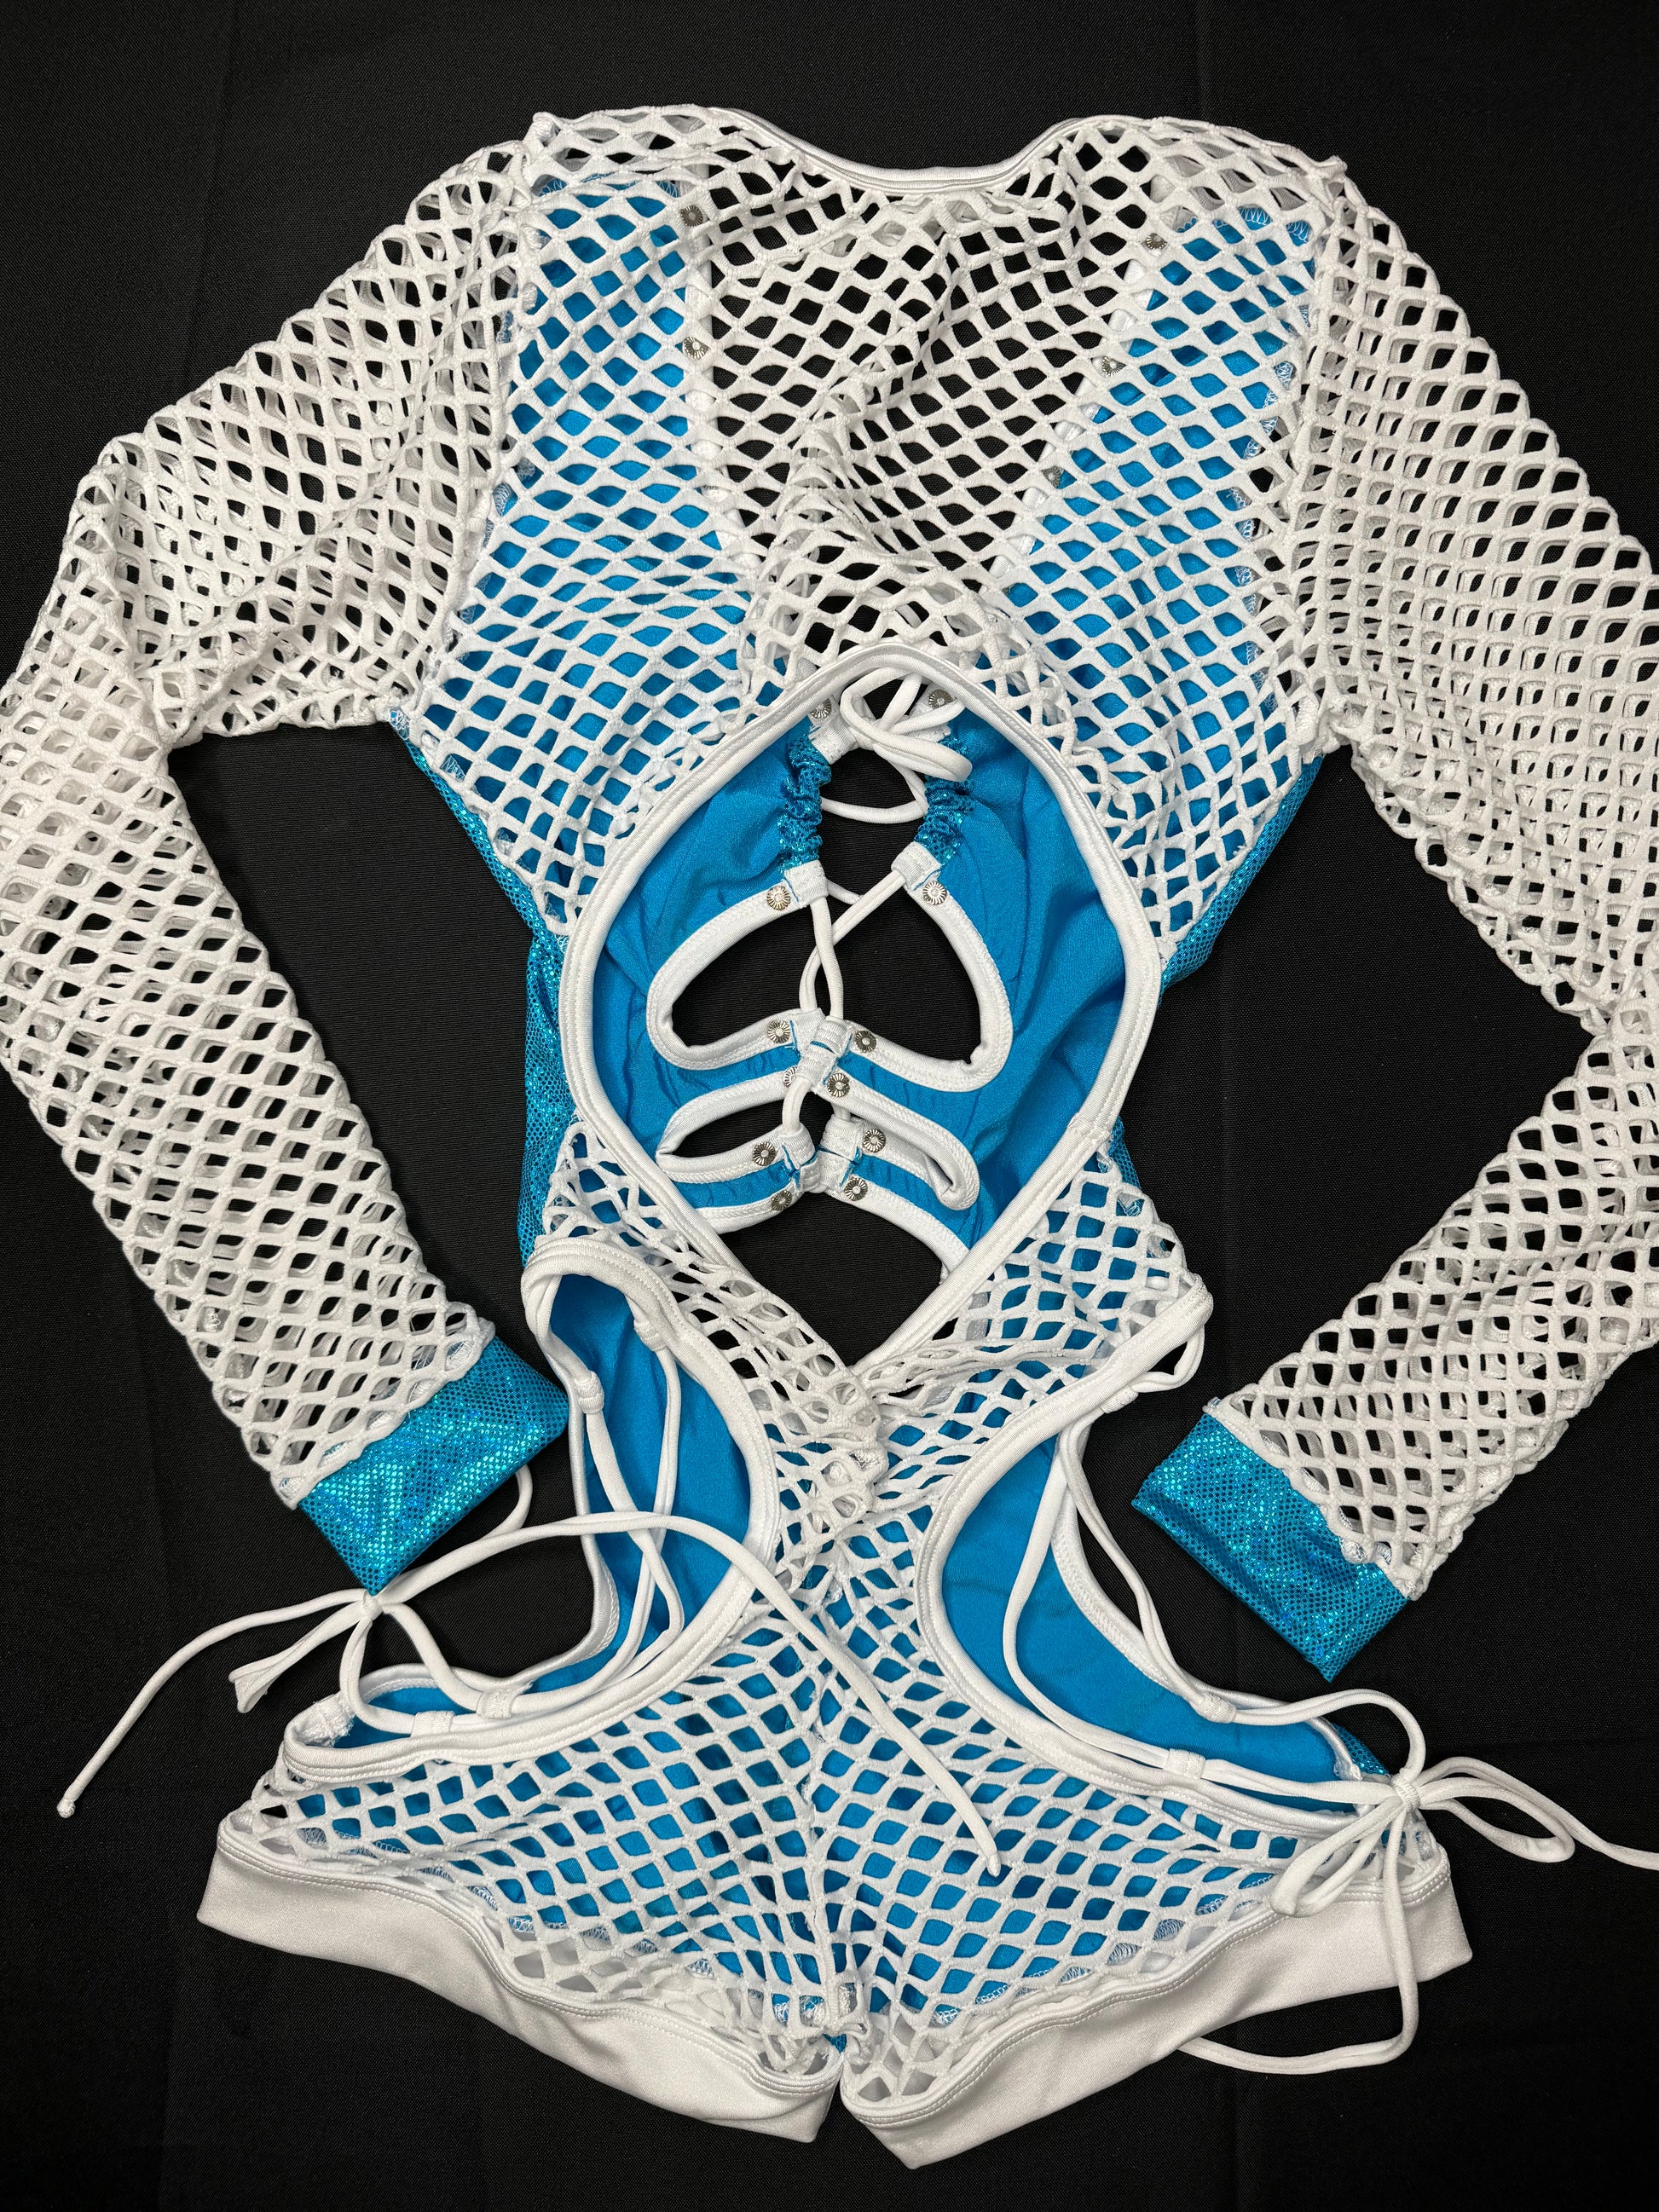 Metallic Turquoise/White Fishnet Long Sleeve Bartender Romper Outfit